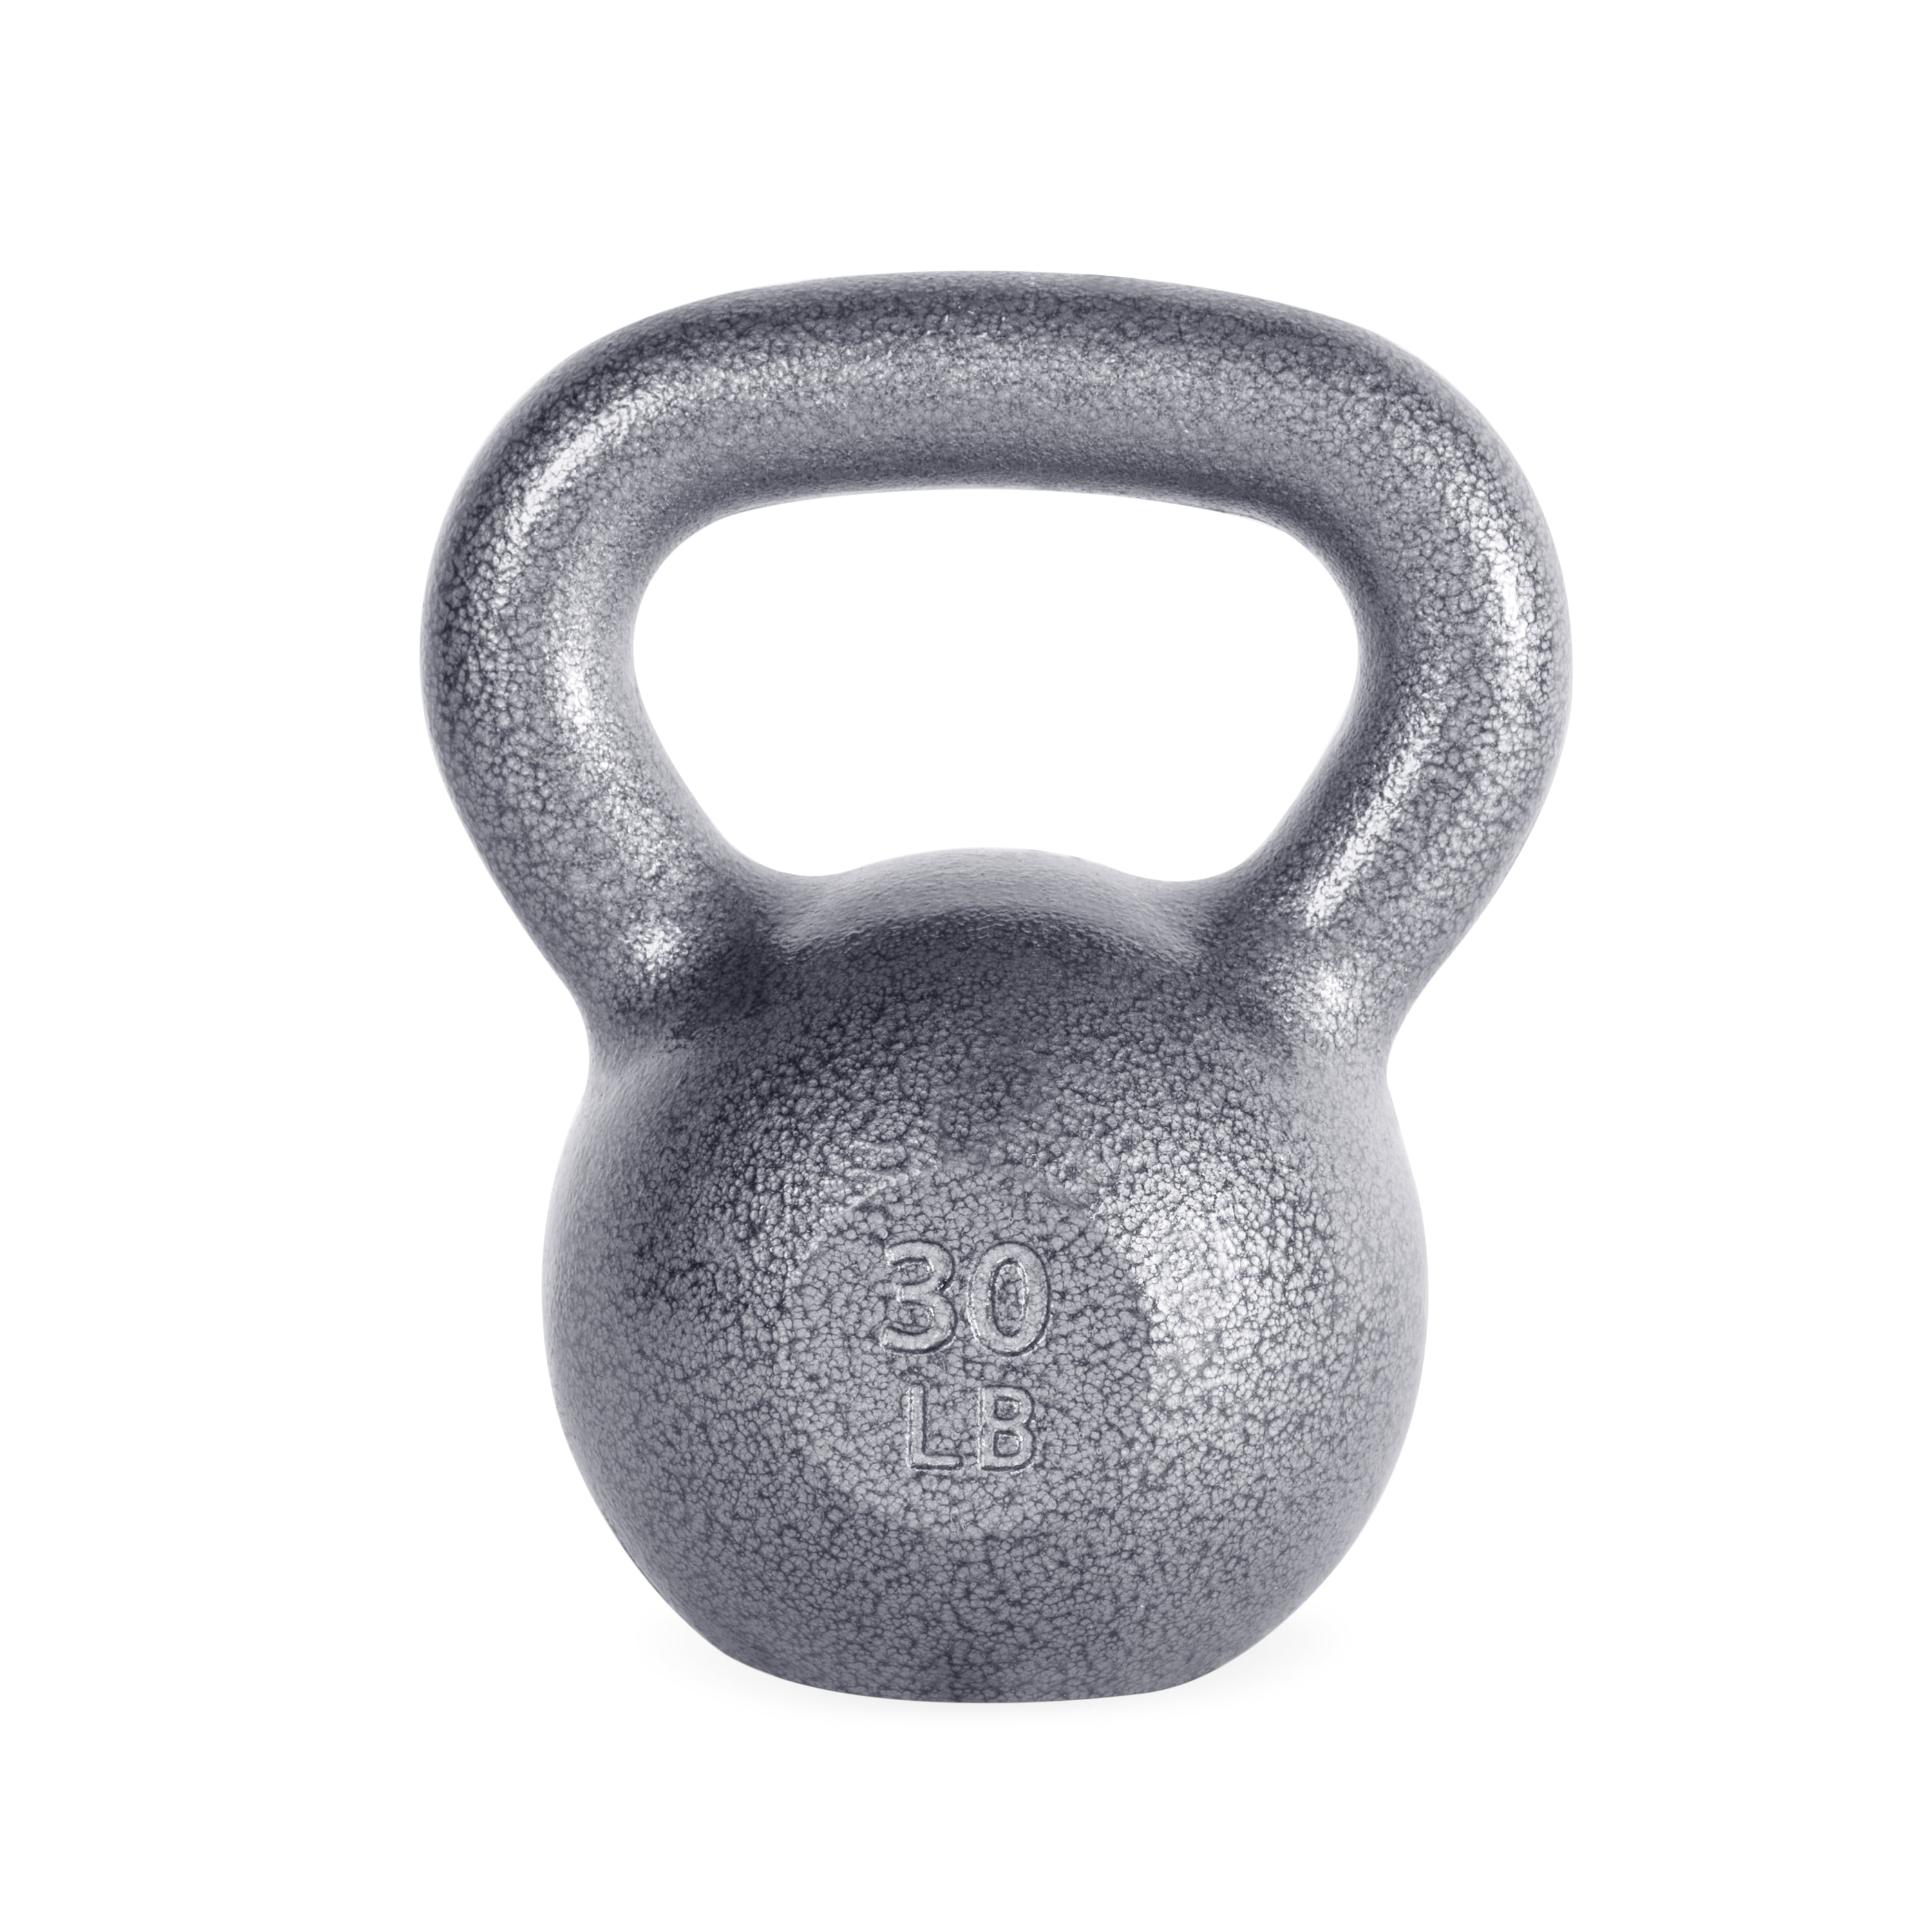 WEIDER Kettlebell 15 lb Crossfit px90 Home Gym Dumb Bells Weights 